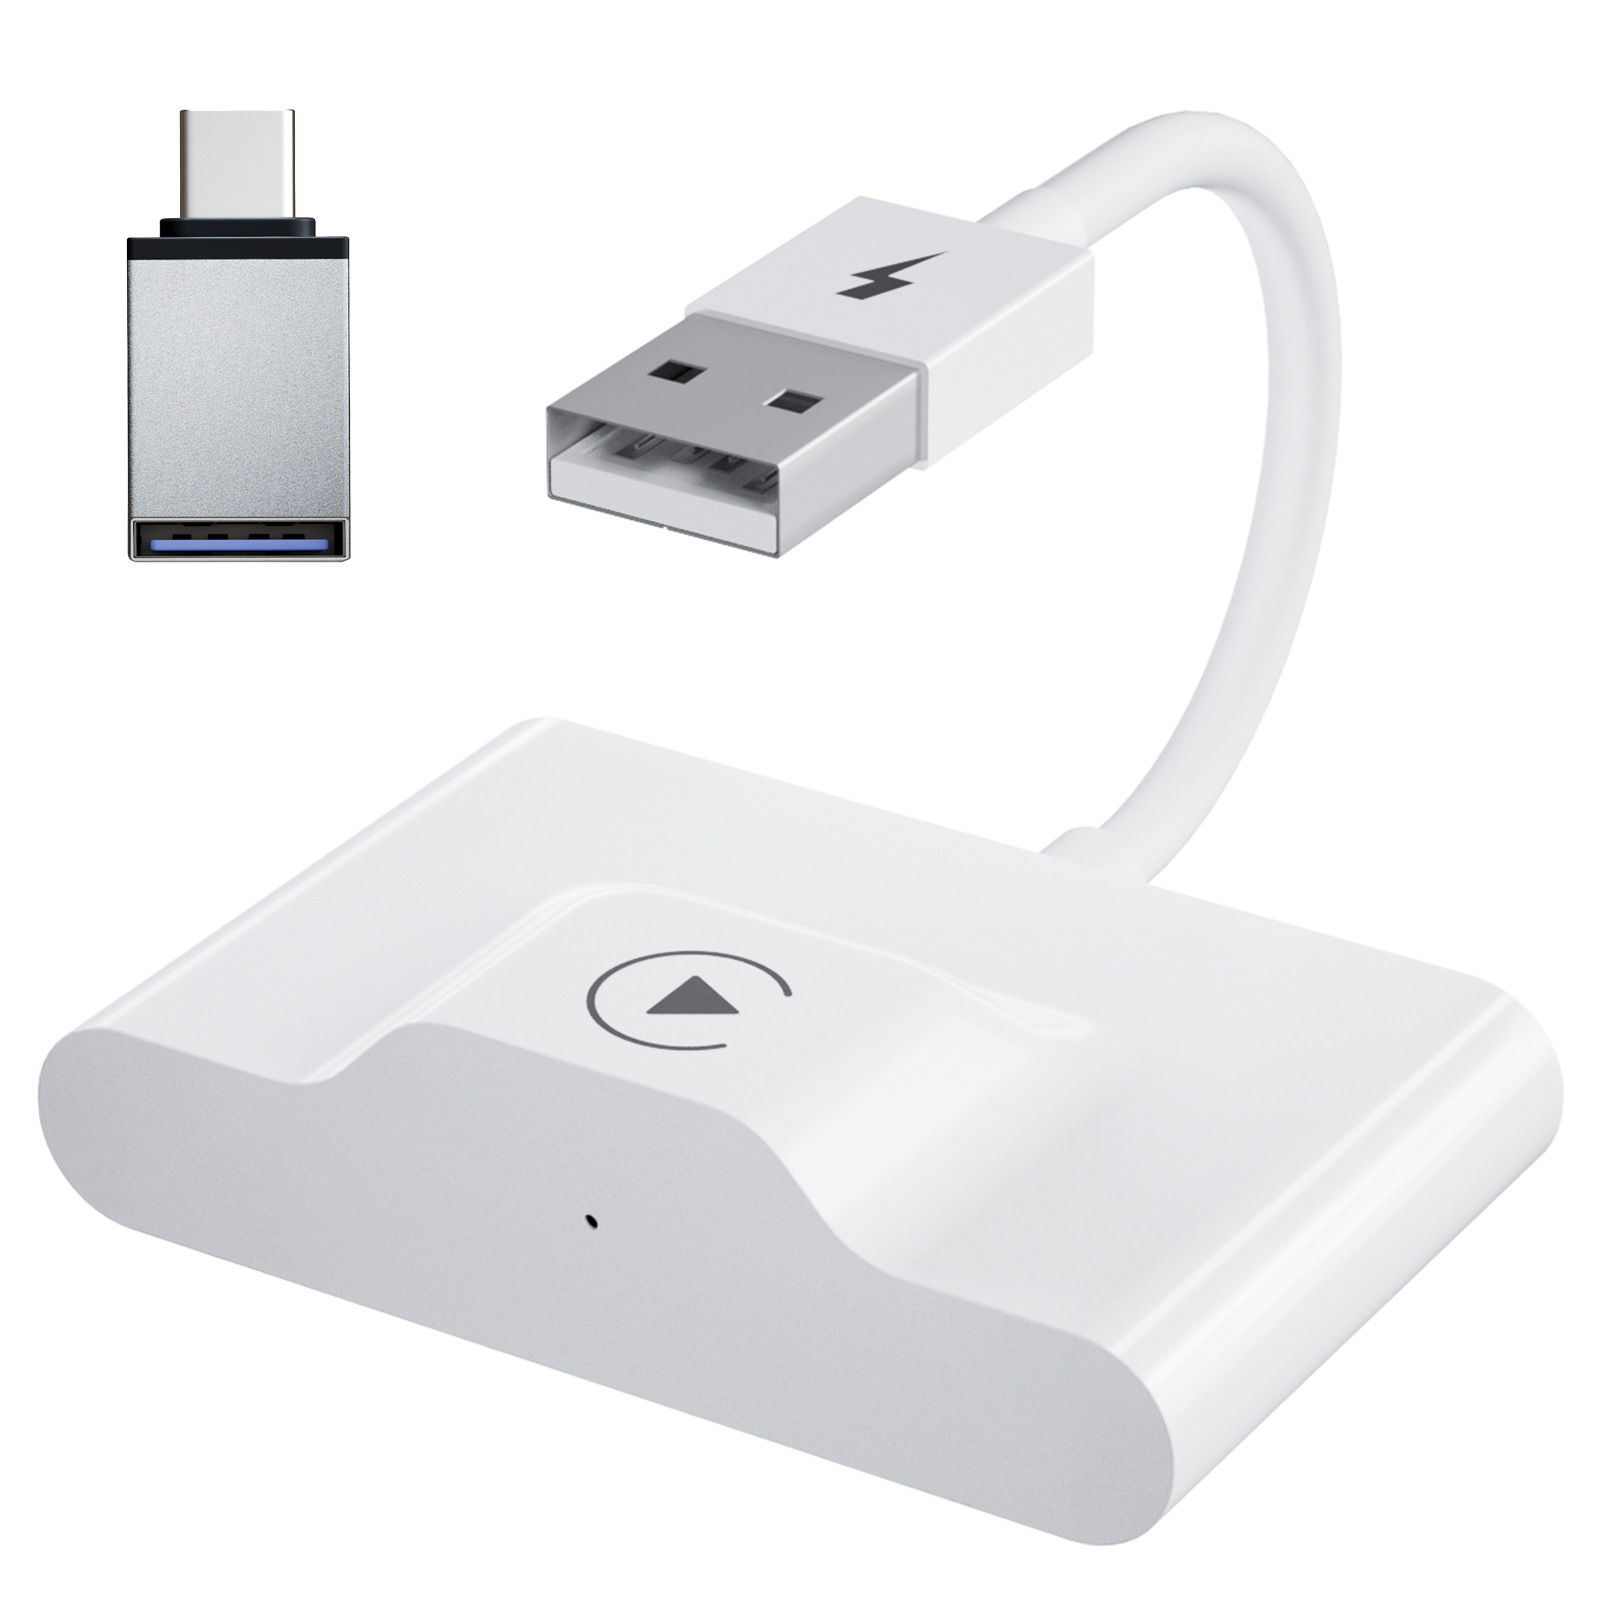 Wireless Carplay Adapter for iPhone Car Plug Play 5ghz Wifi Bluetooth Usb